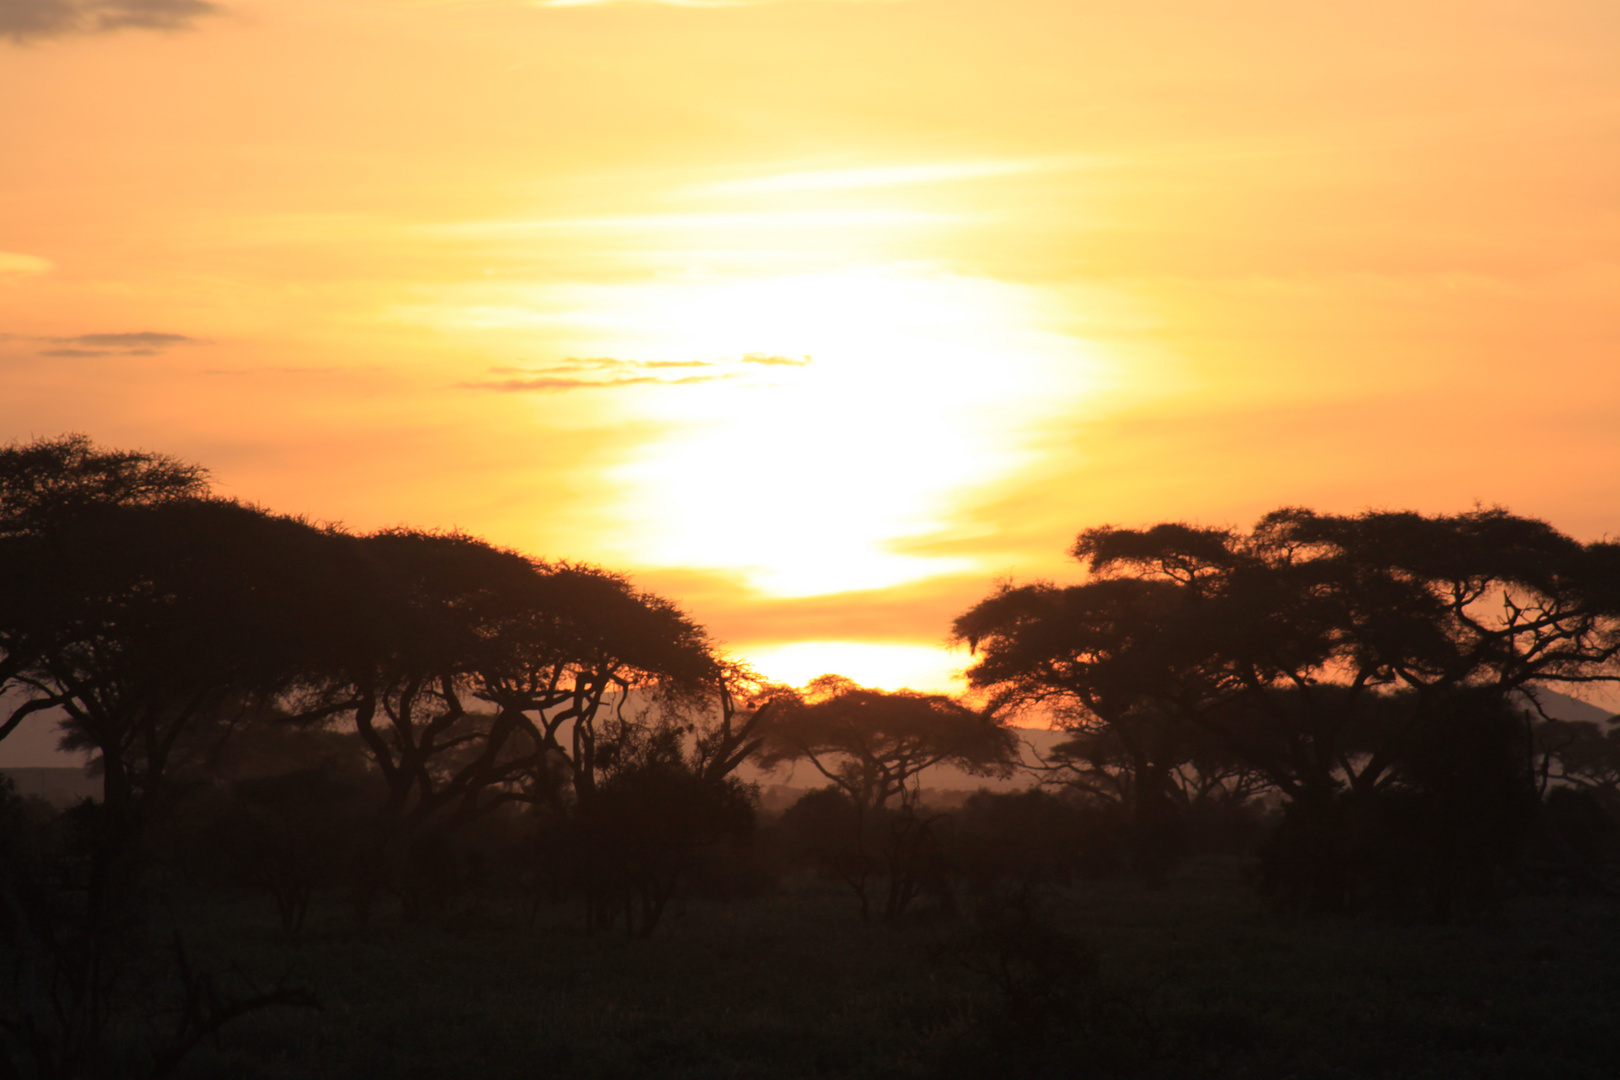 Sundown East Africa